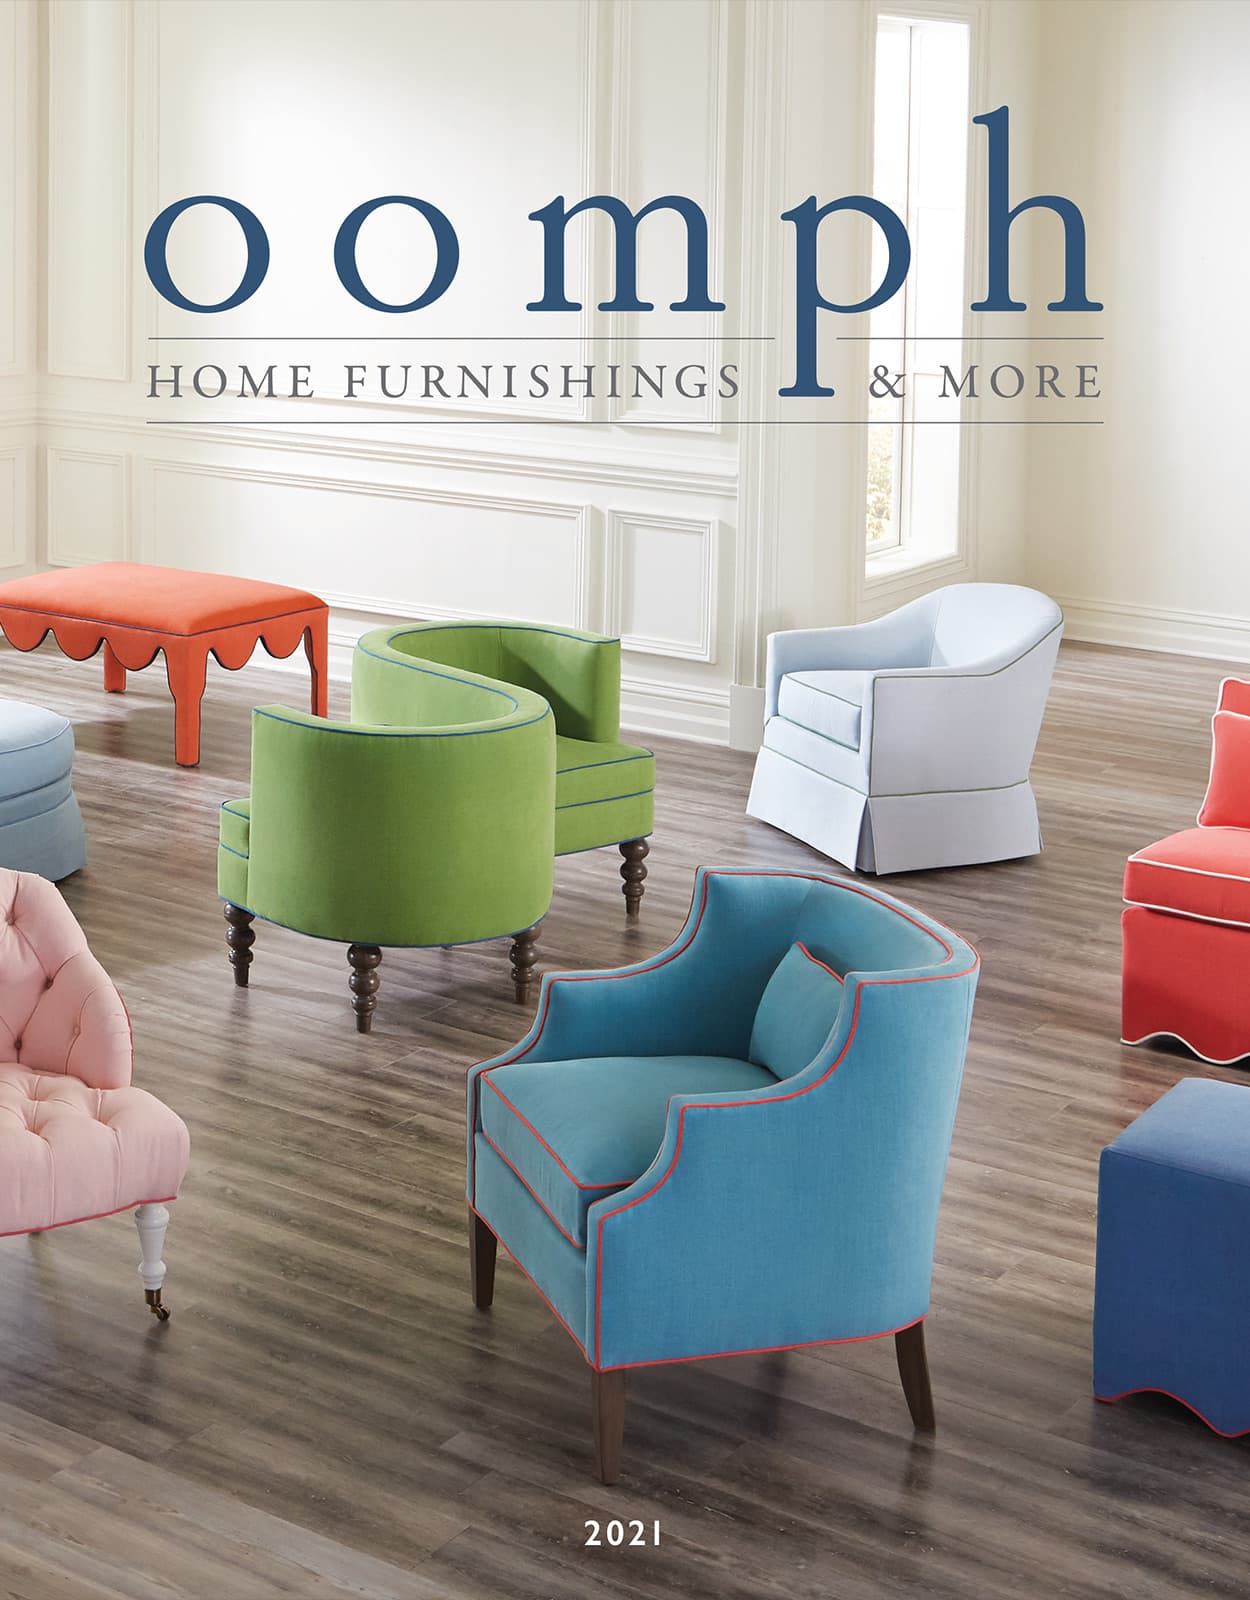 oomph Home Furnishings & More, 2021